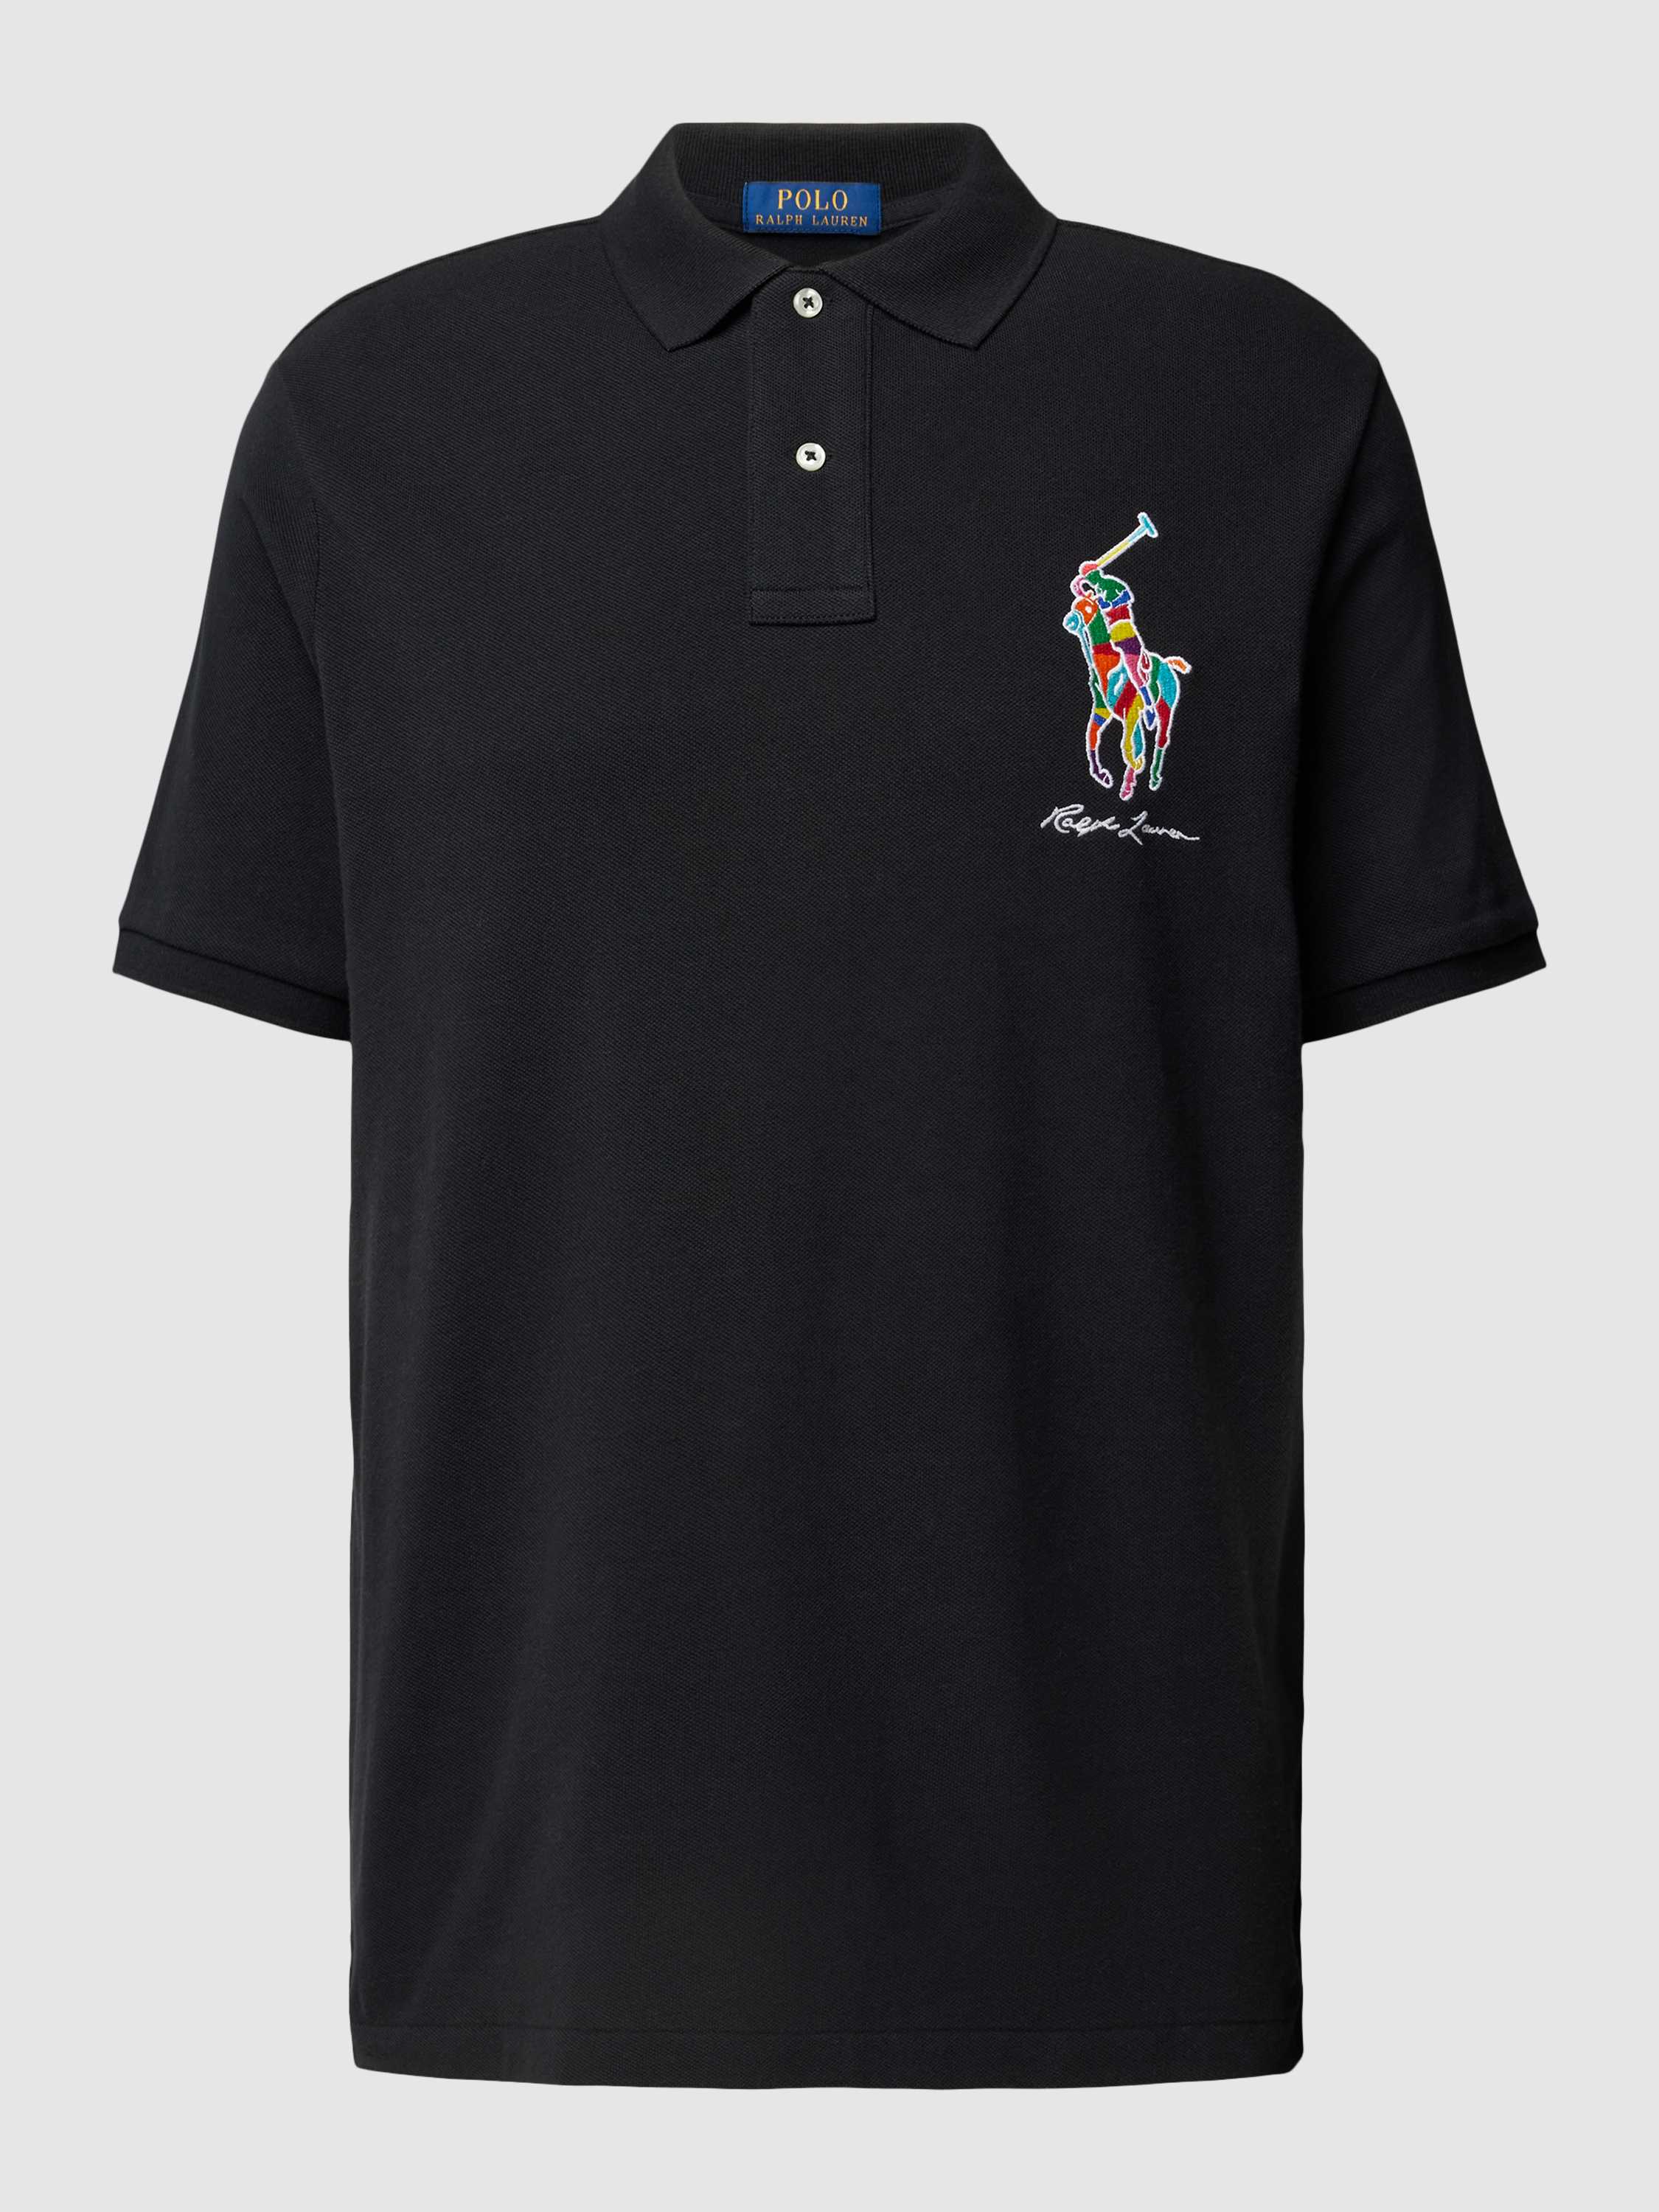 Classic Fit Poloshirt mit Label-Stitching